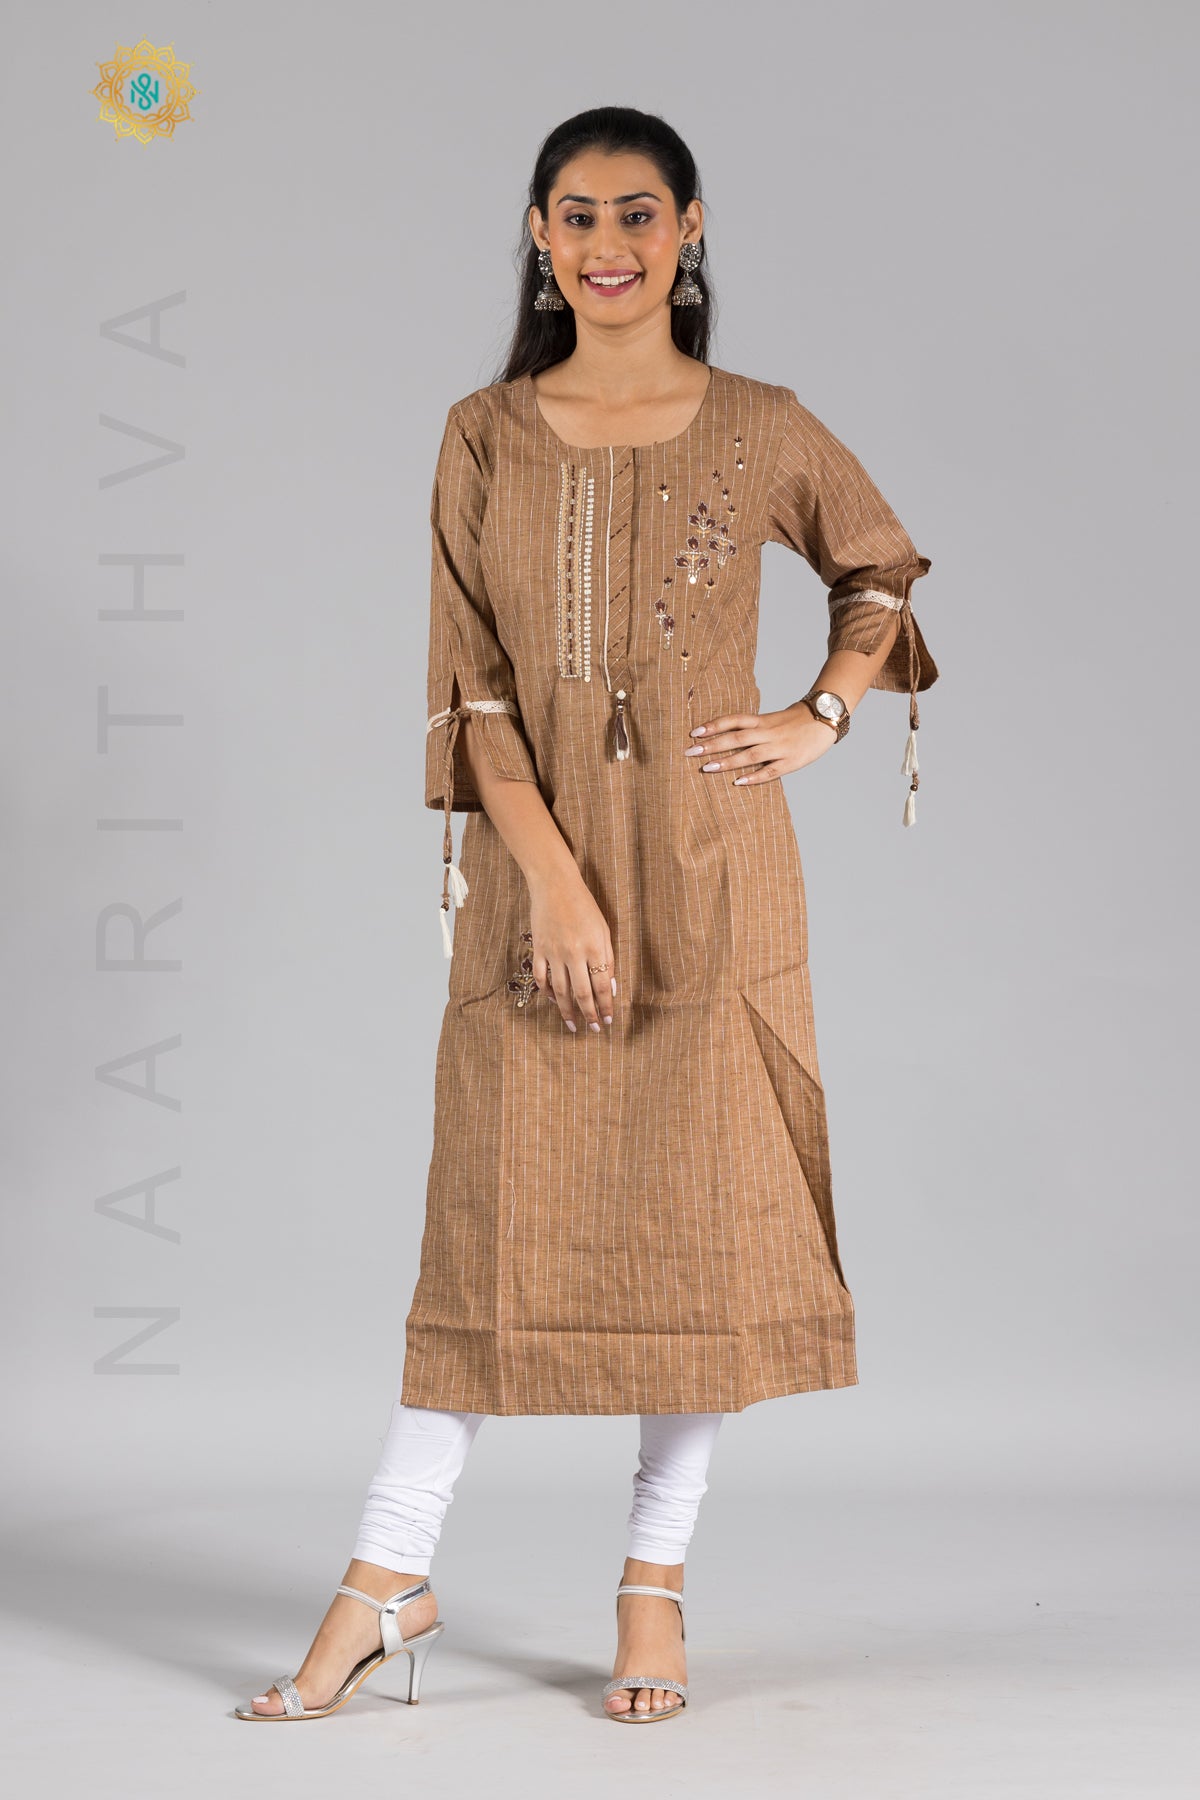 New Latest casual wear salwar kurti designs 2020-21 | Patiala kurti design  | Salwar suit new designs - YouTube